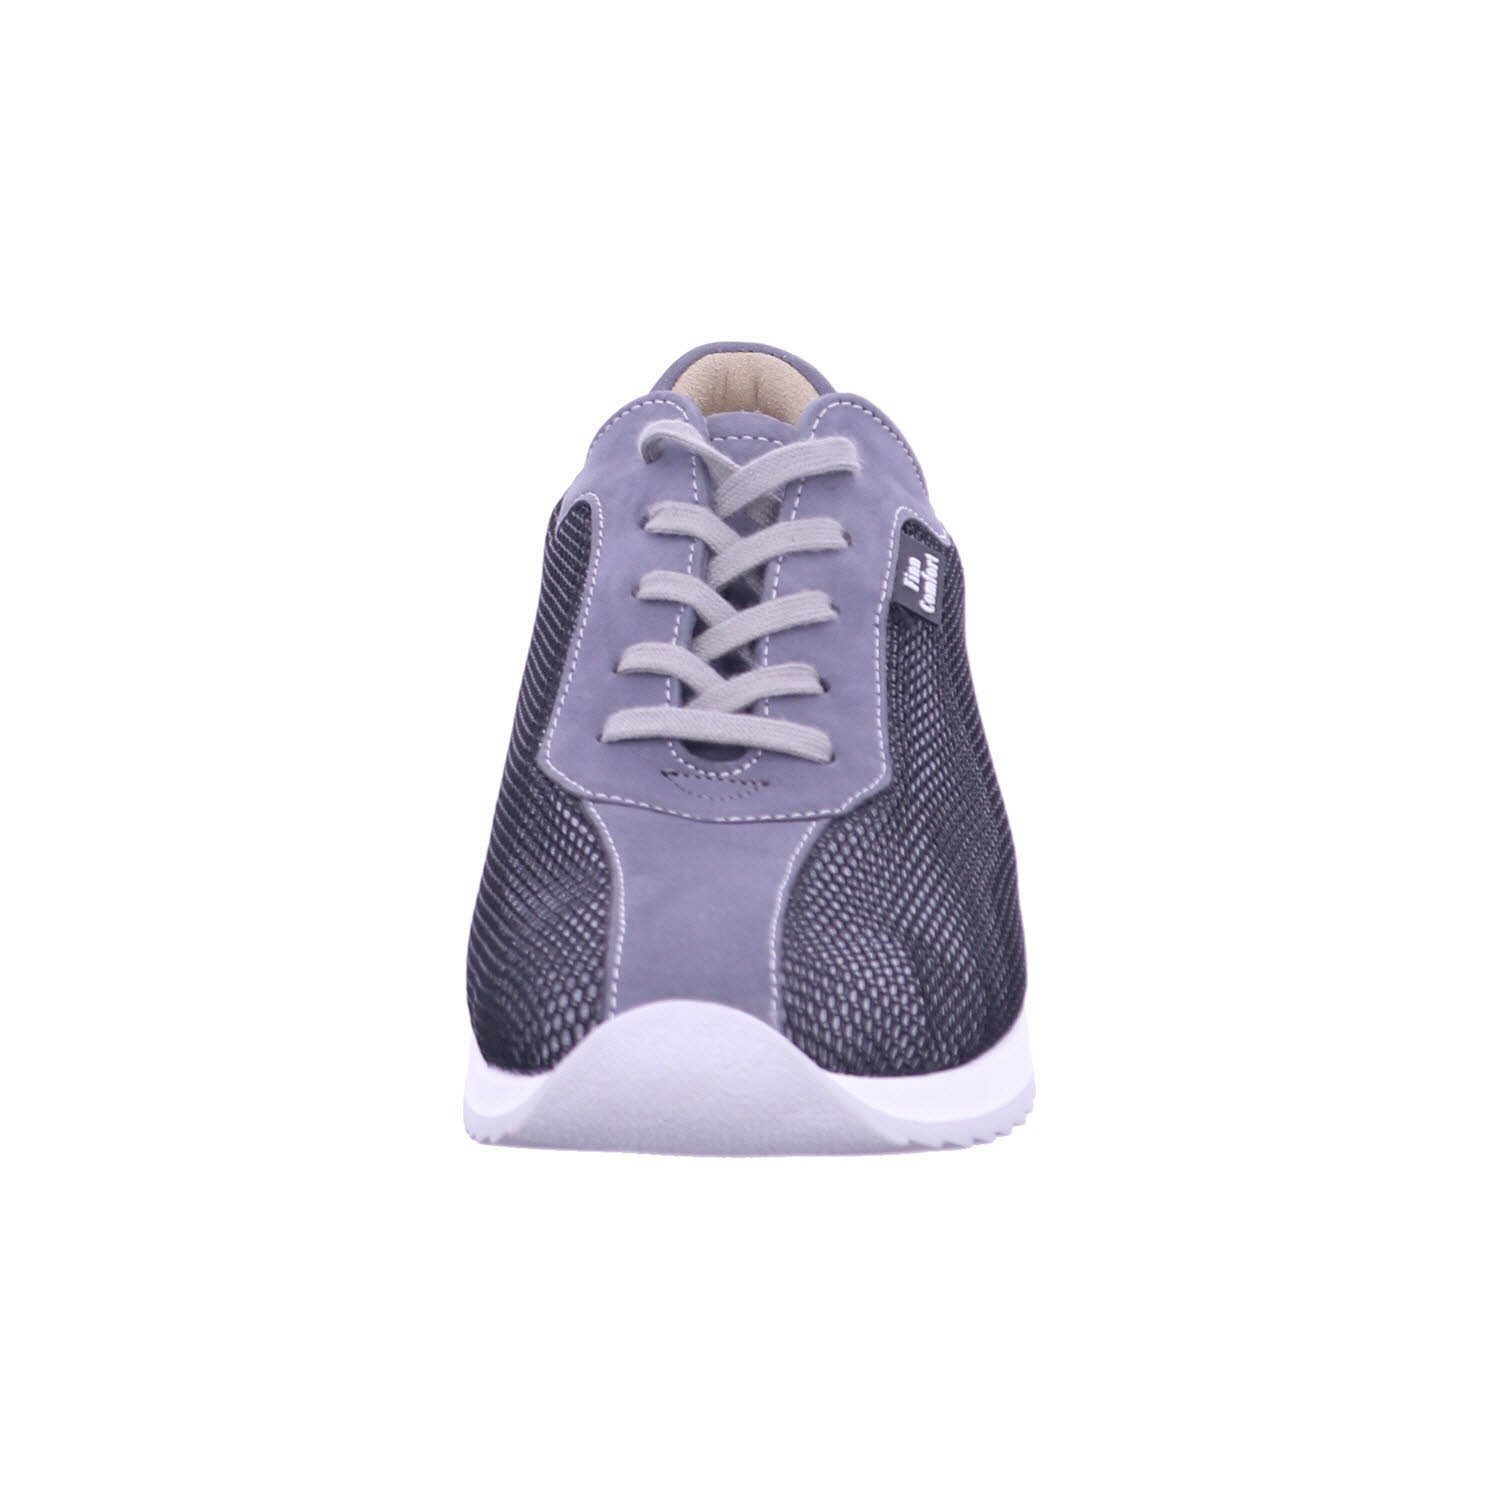 Comfort Sneaker grey Finn